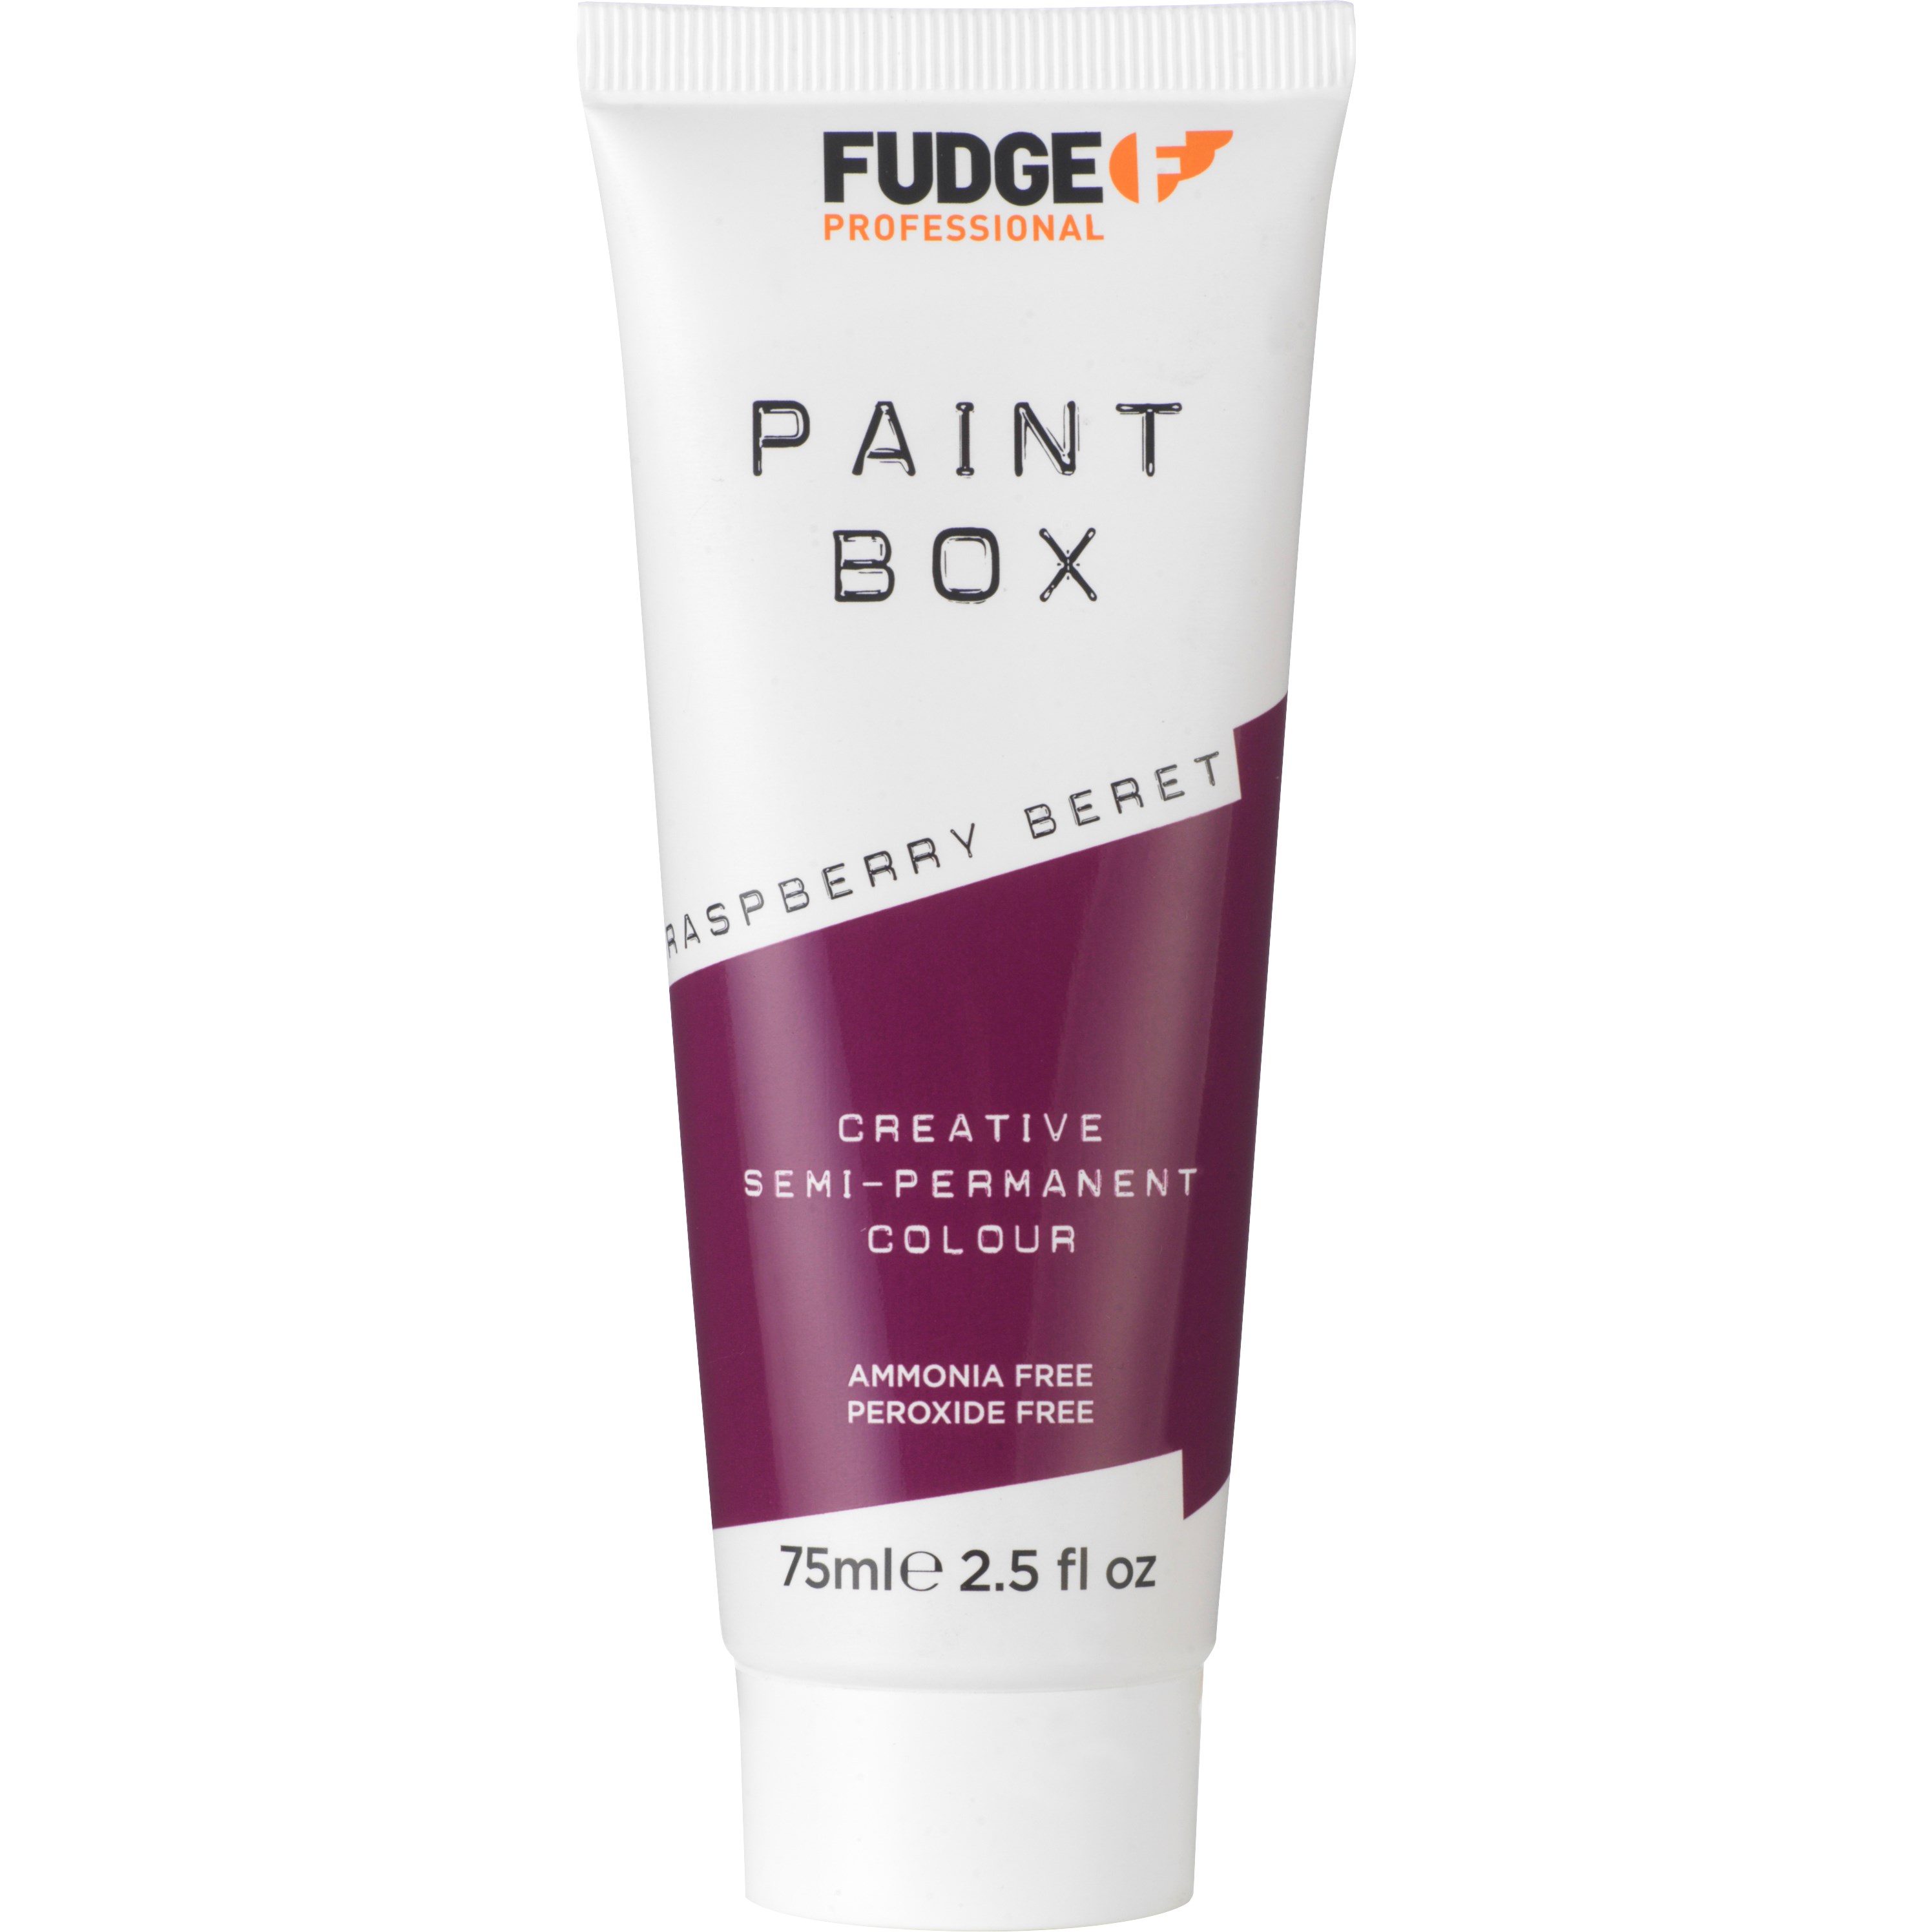 Bilde av Fudge Paintbox Creative Semi-permanent Colour Rasberry Beret